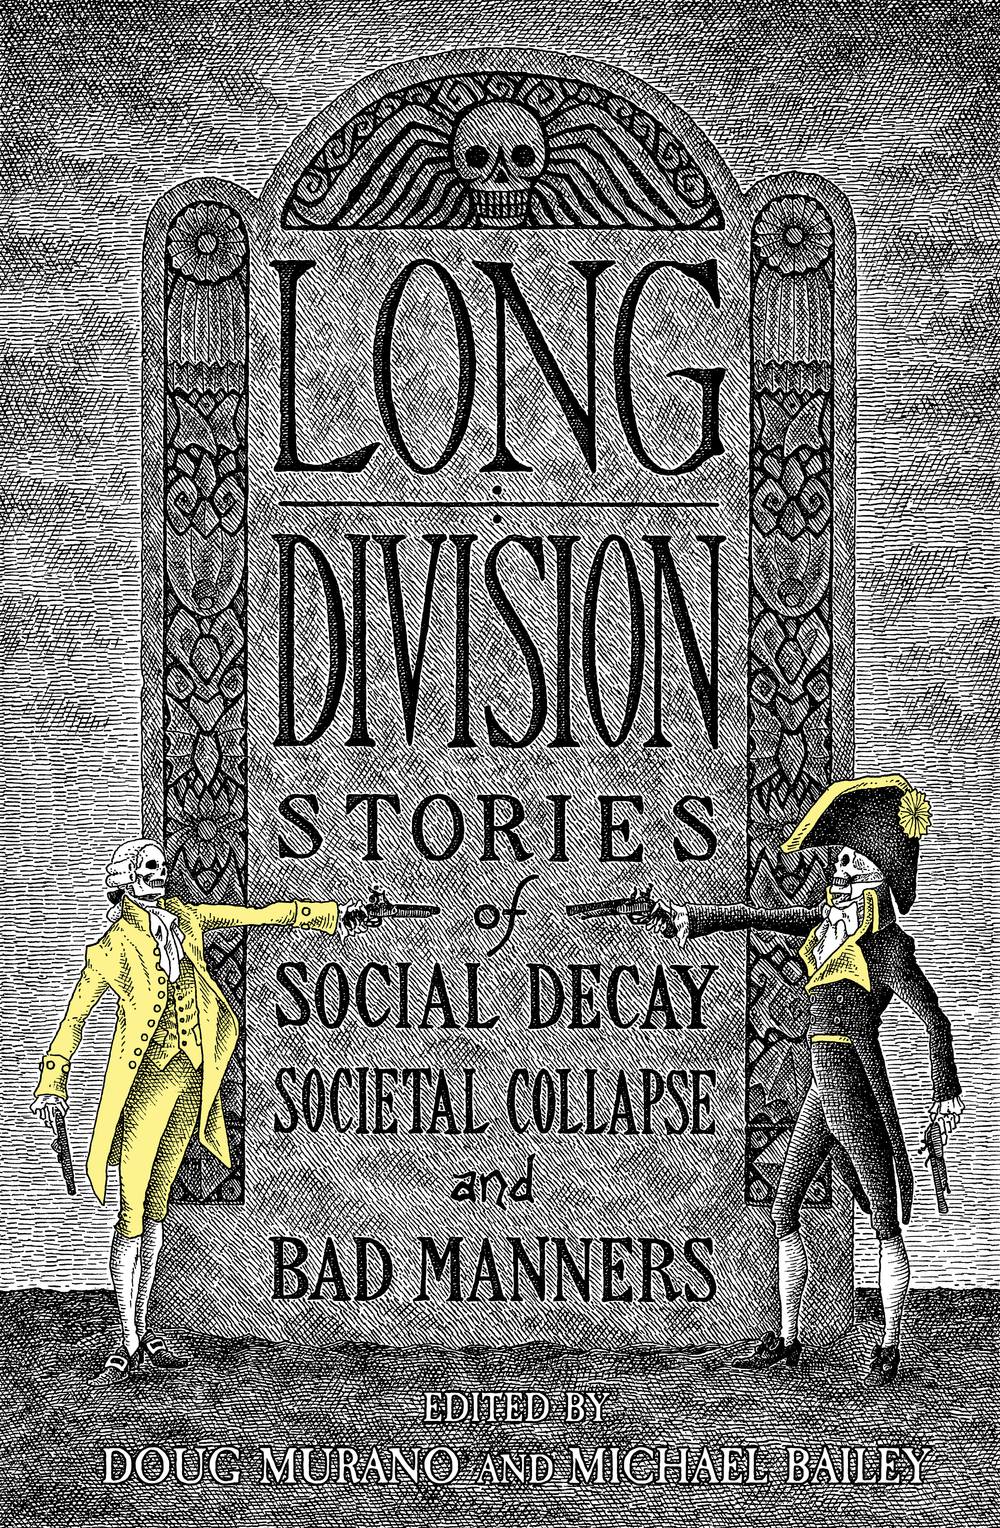 Long Division anthology